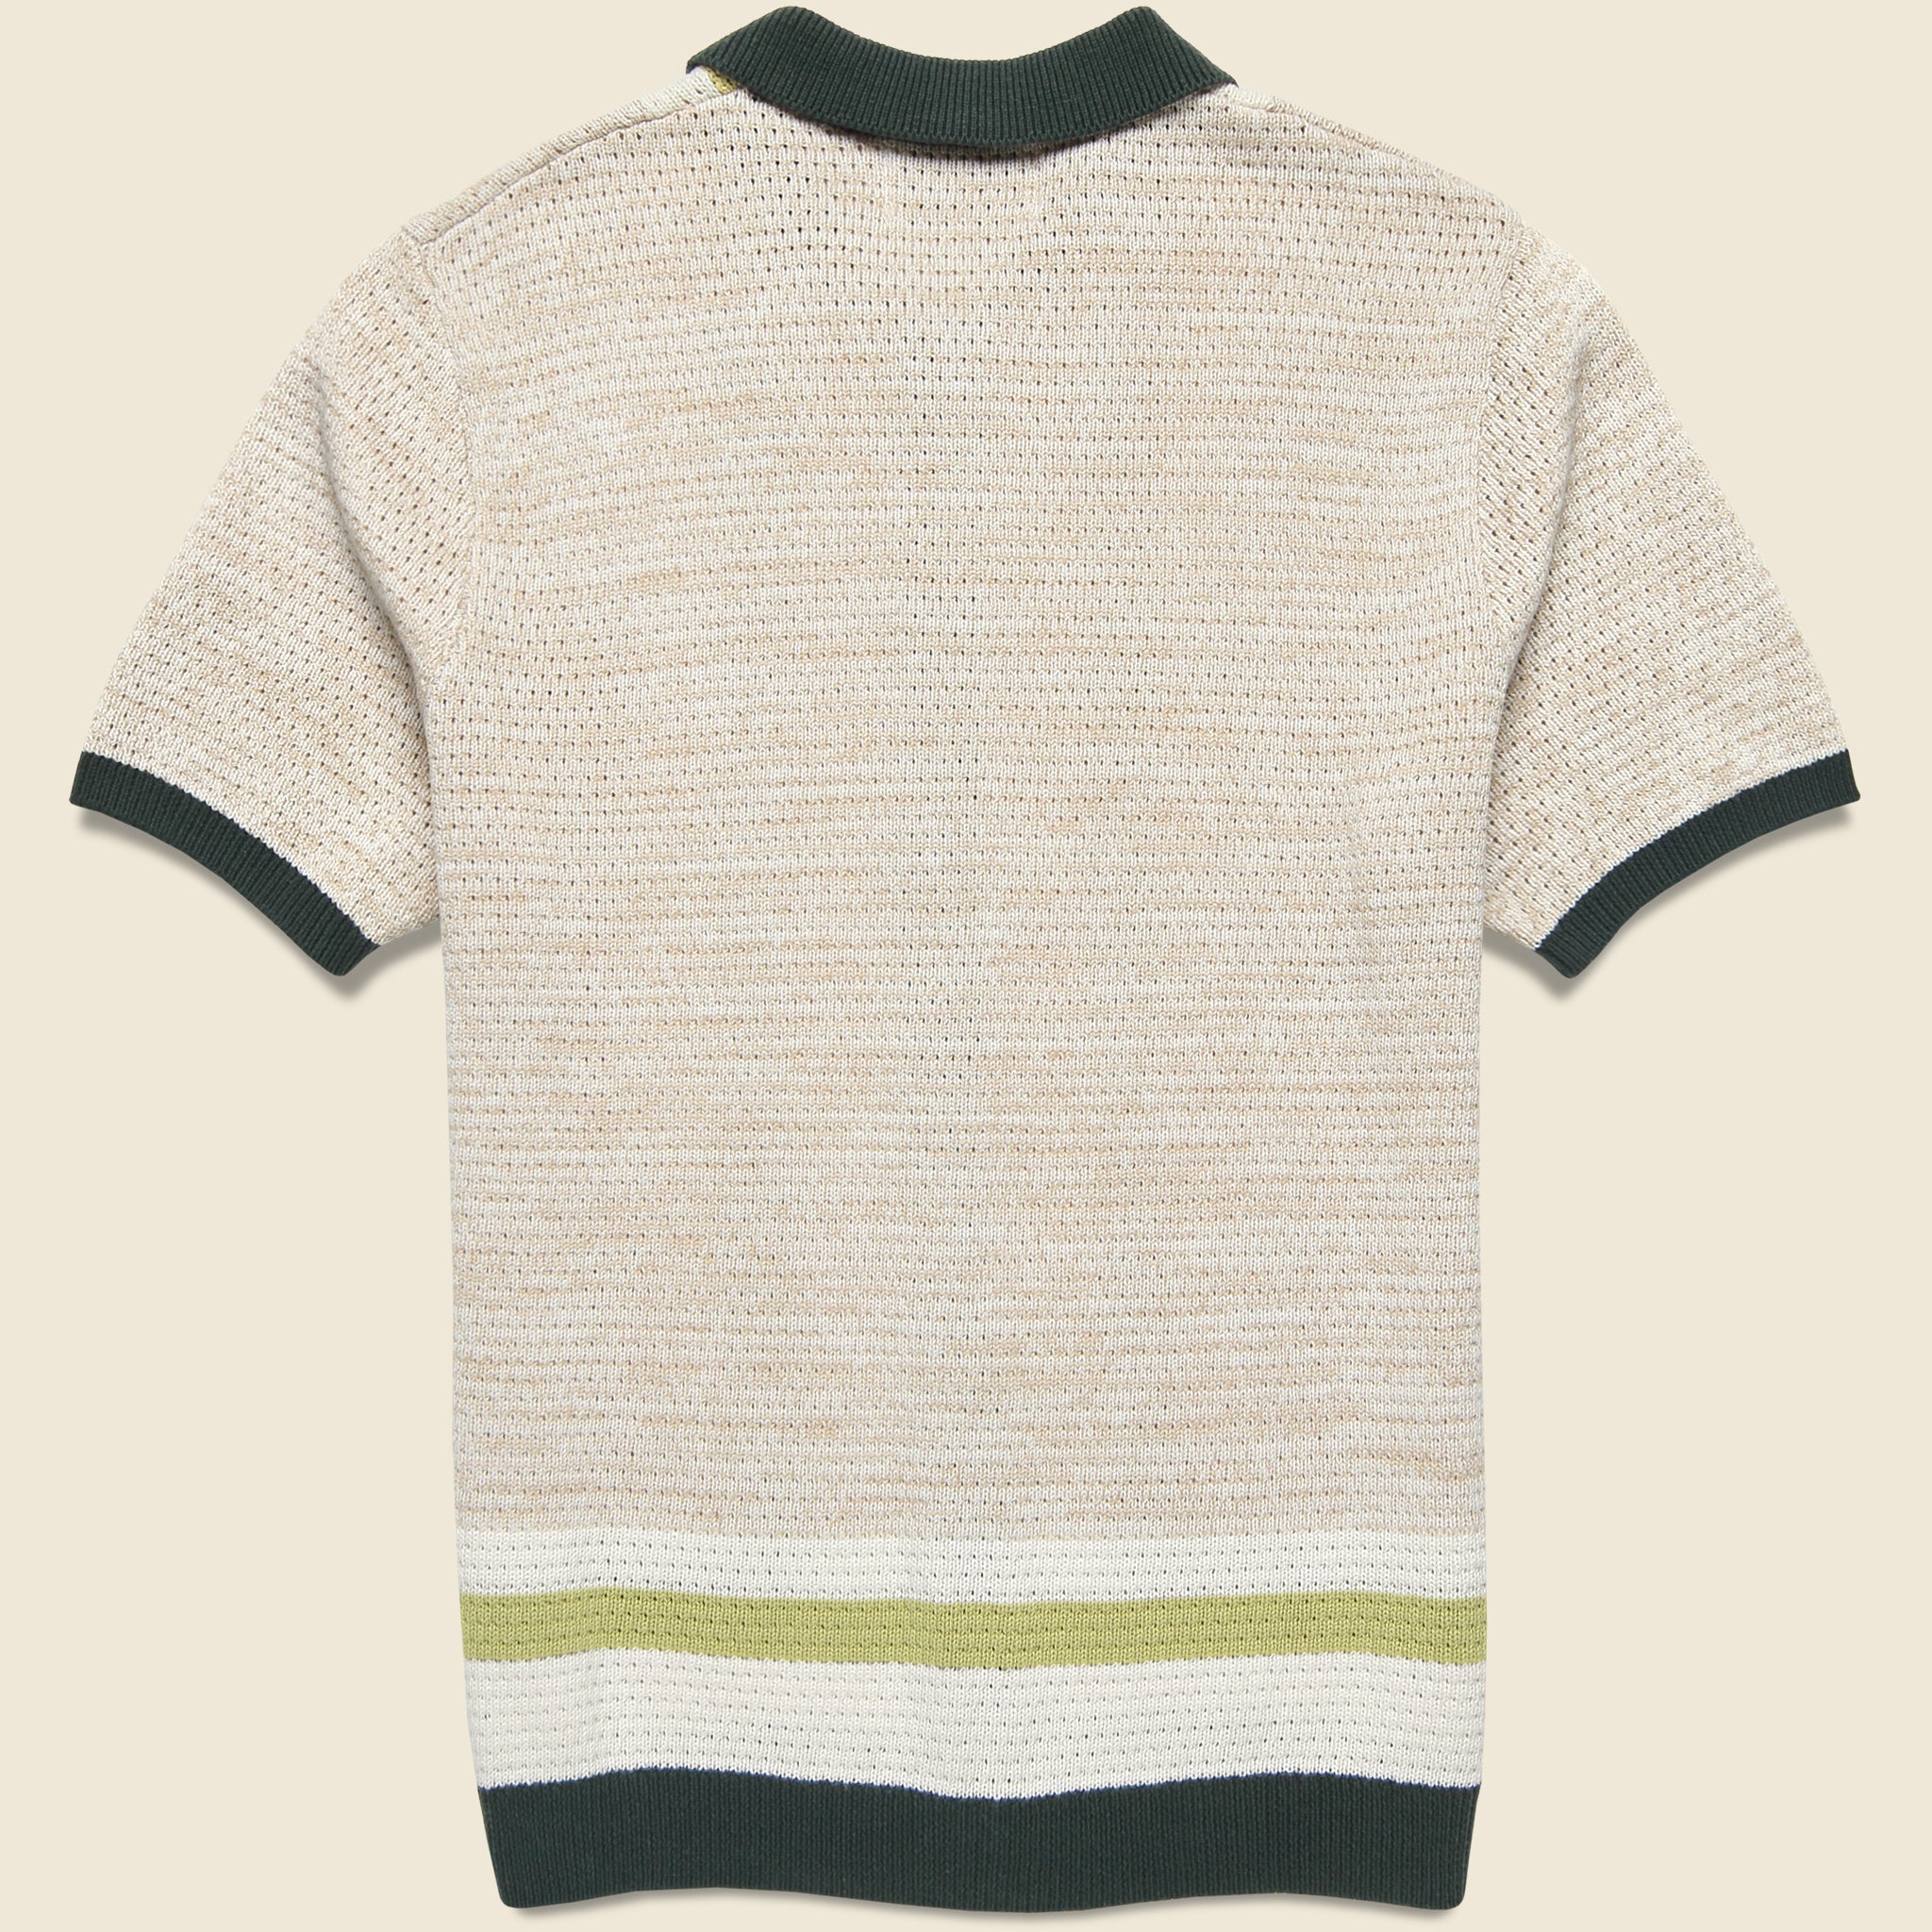 Tellaro Open Knit Shirt - Green/Ecru - Wax London - STAG Provisions - Tops - S/S Knit